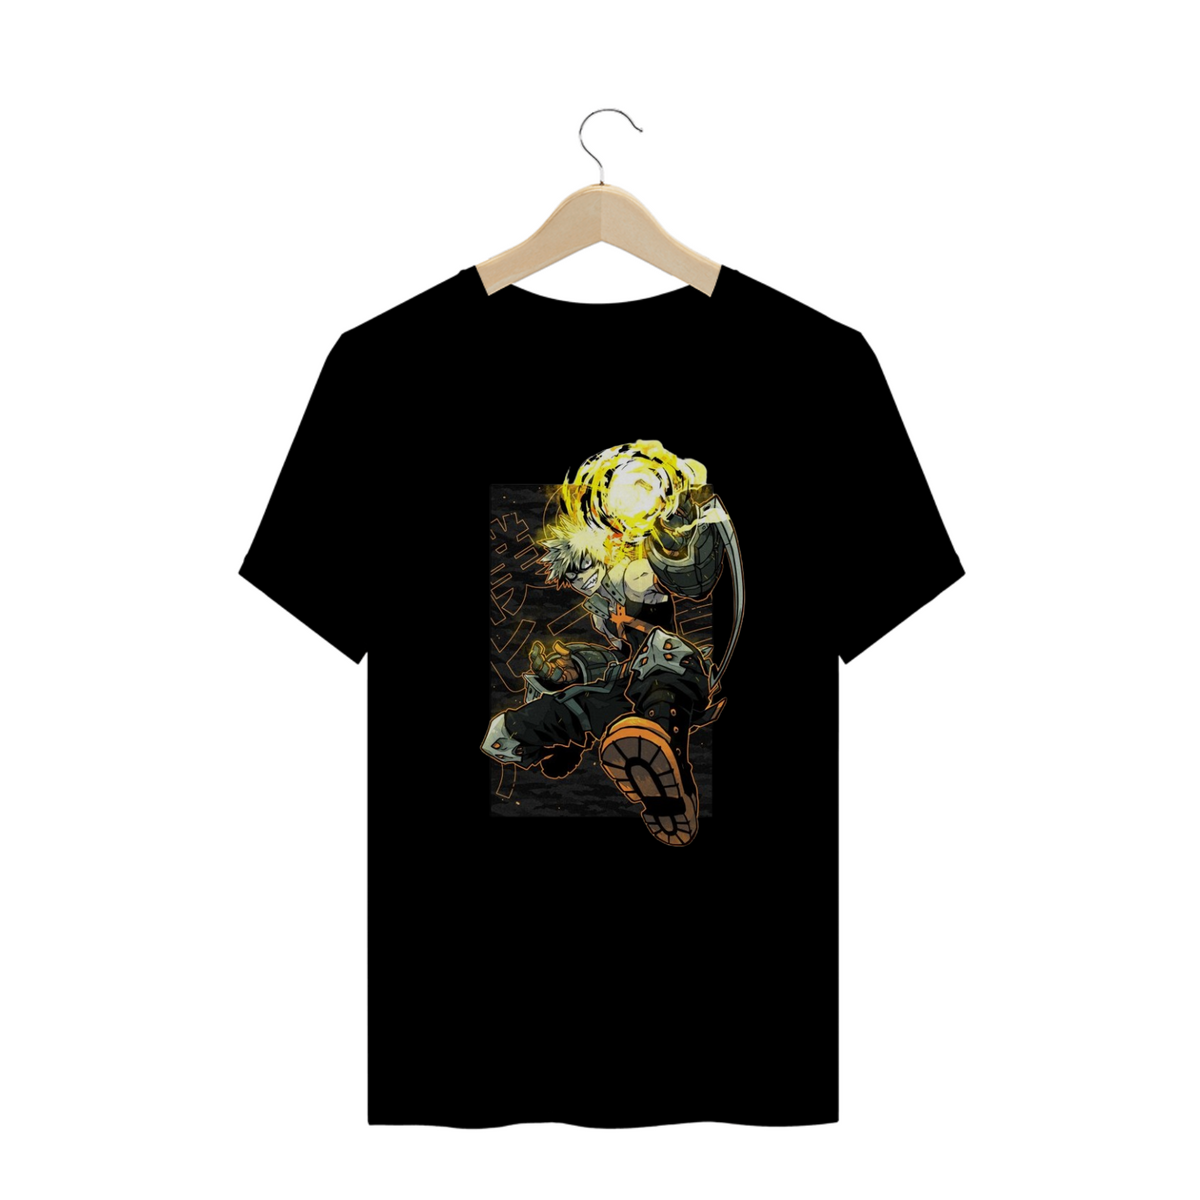 Nome do produto: Camisa T-shirt Plus Size - Bakugo (My Hero Academia)